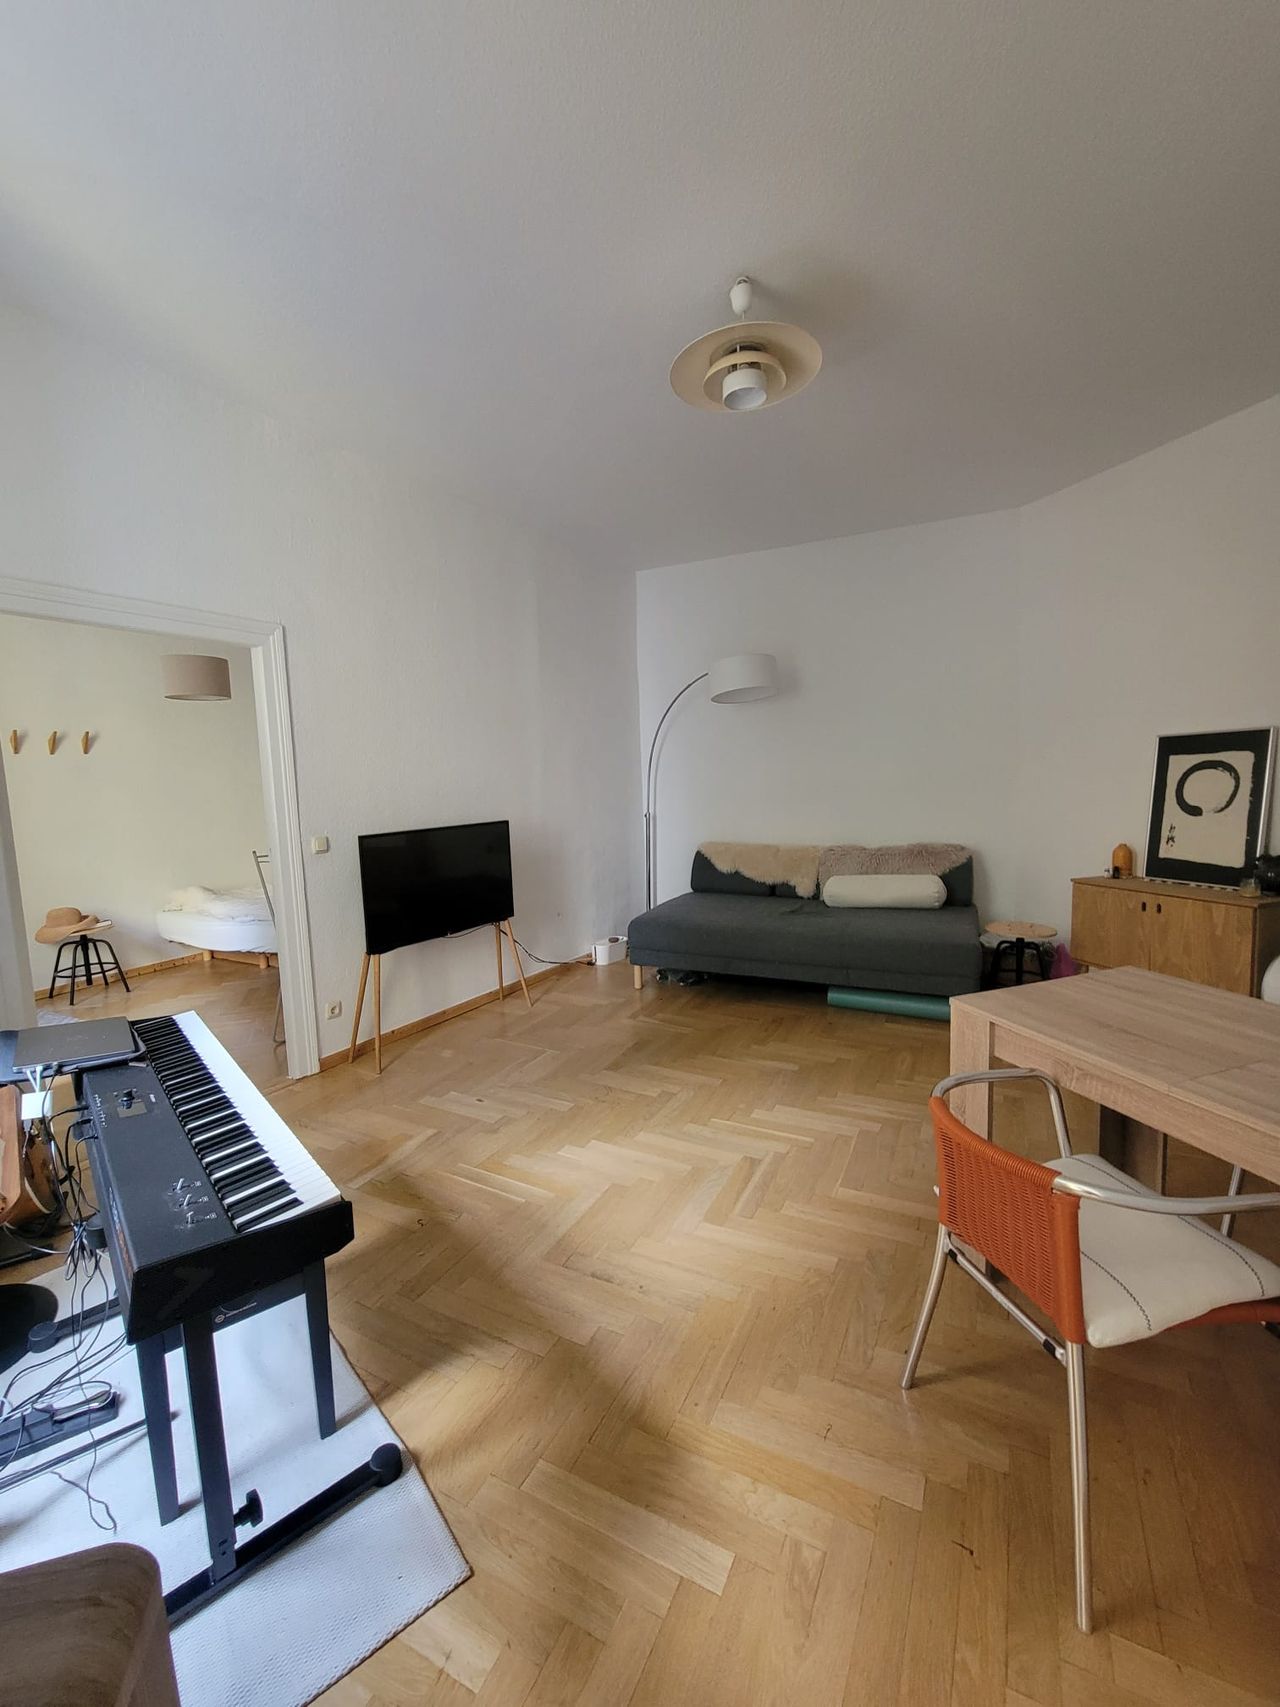 Wonderful, cozy, bright and quiet apartment between Zionskirchplatz and Rosenthaler Platz